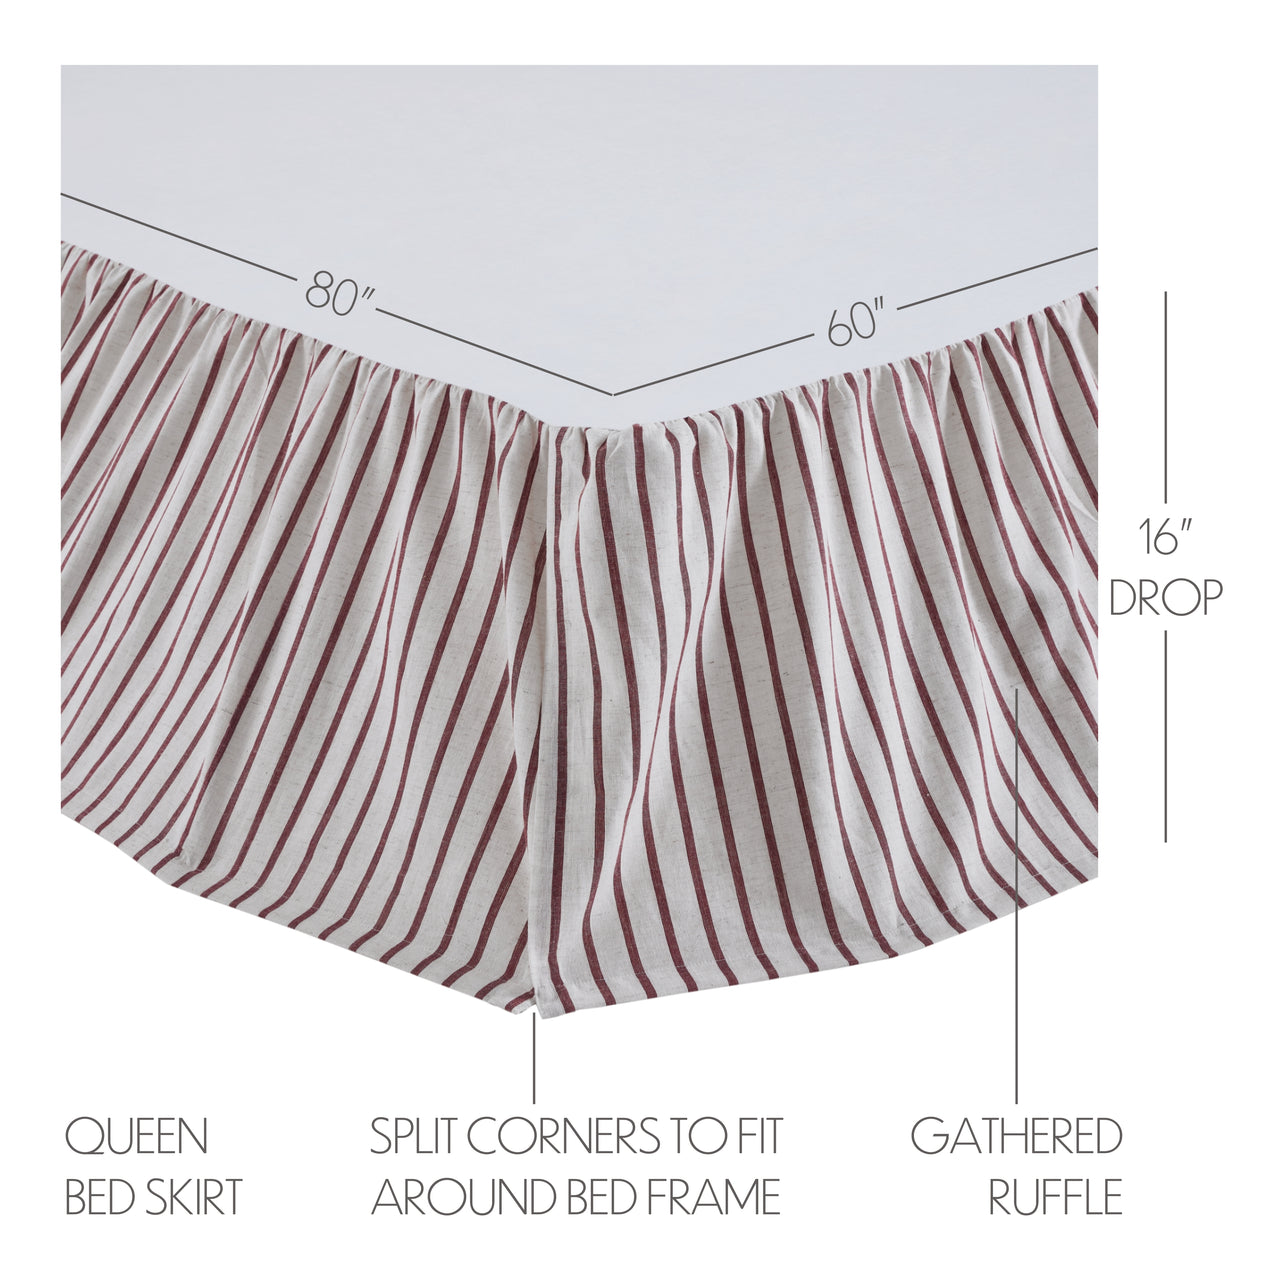 Celebration Queen Bed Skirt 60x80x16 VHC Brands